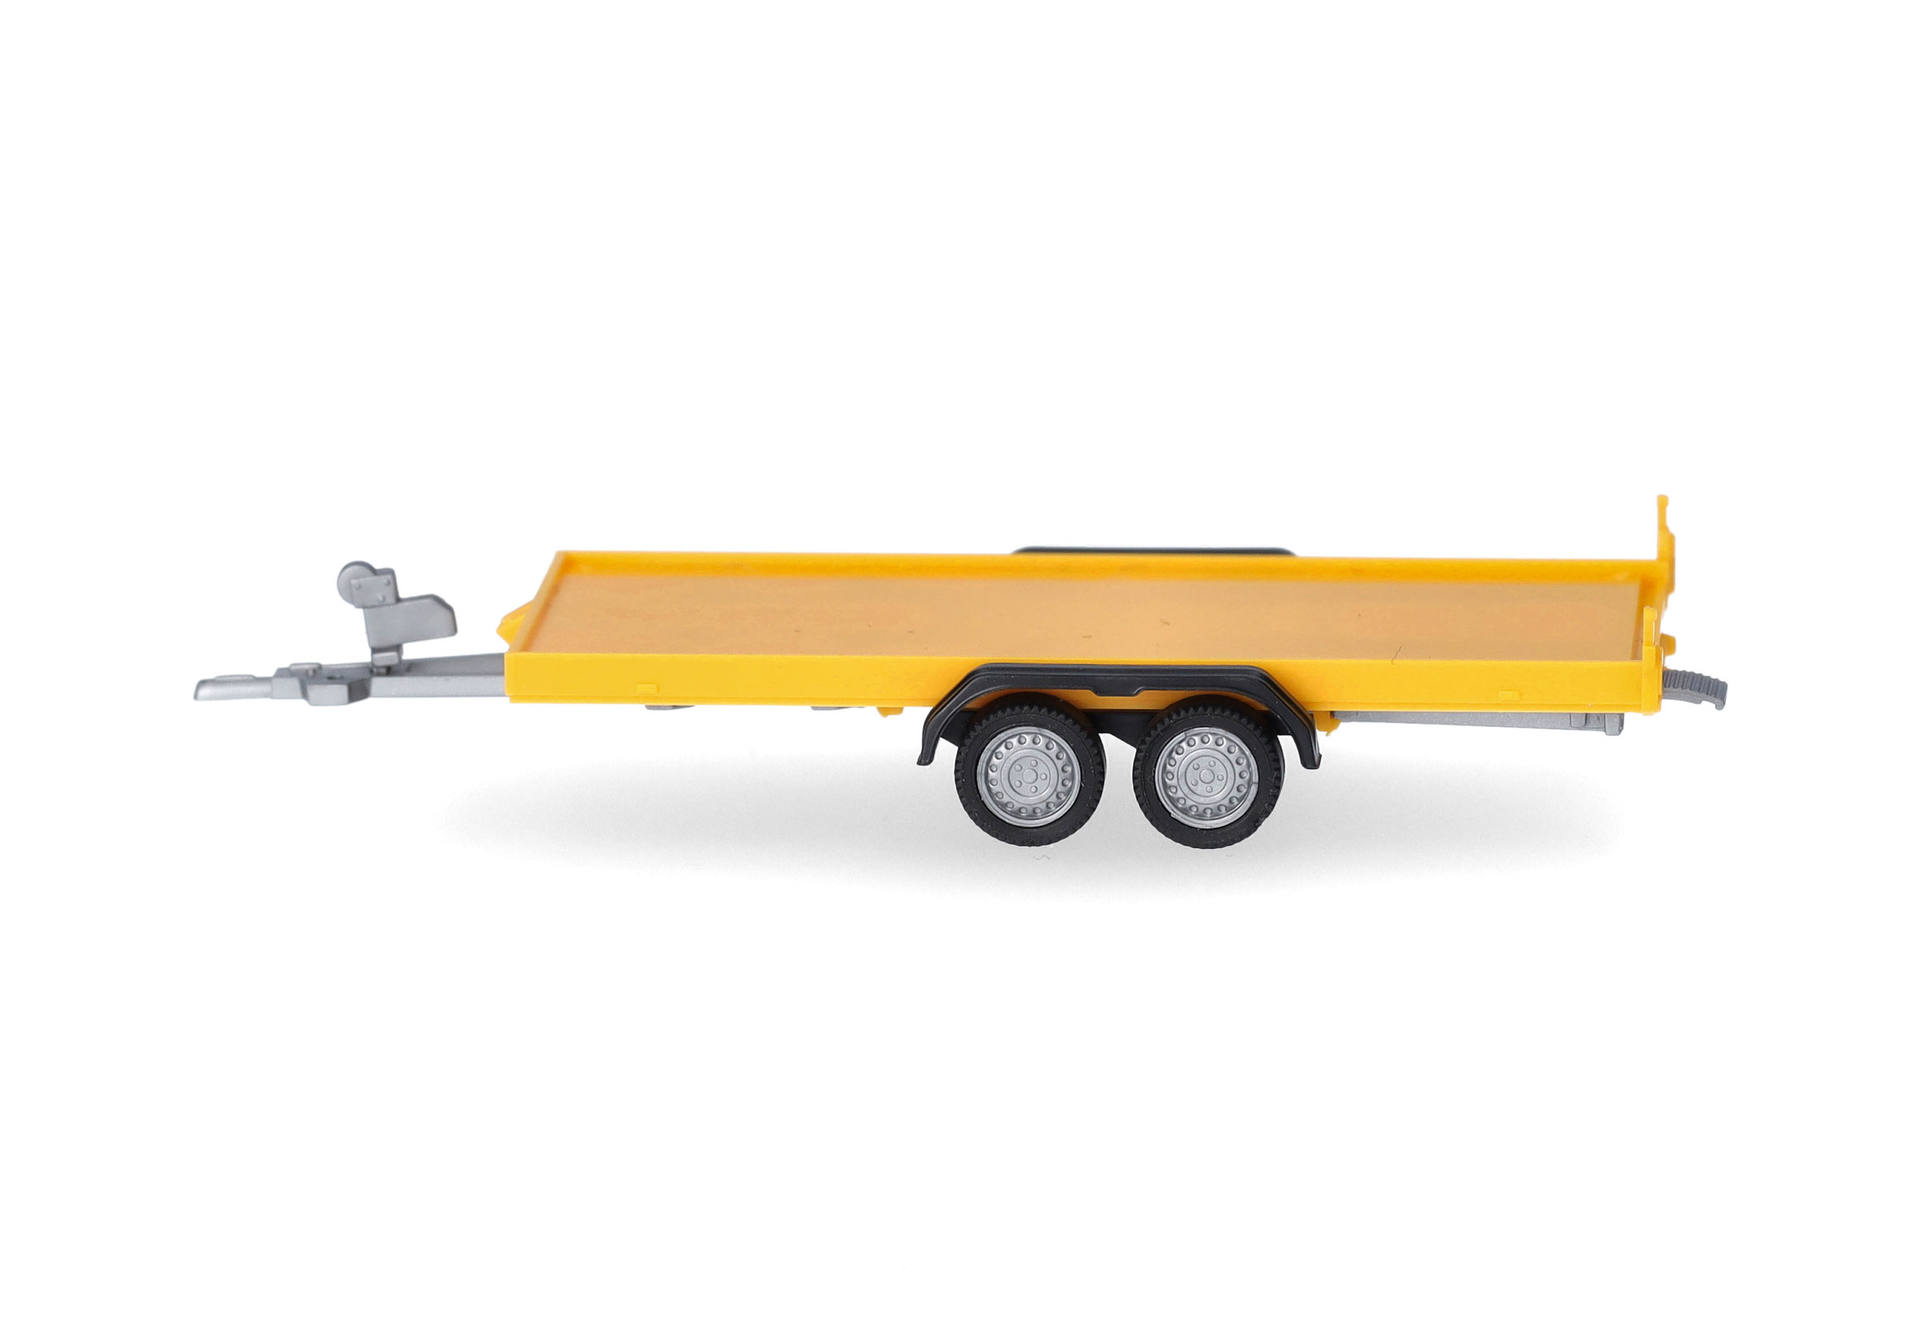 Transport trailer for passenger cars 2-axles, yellow